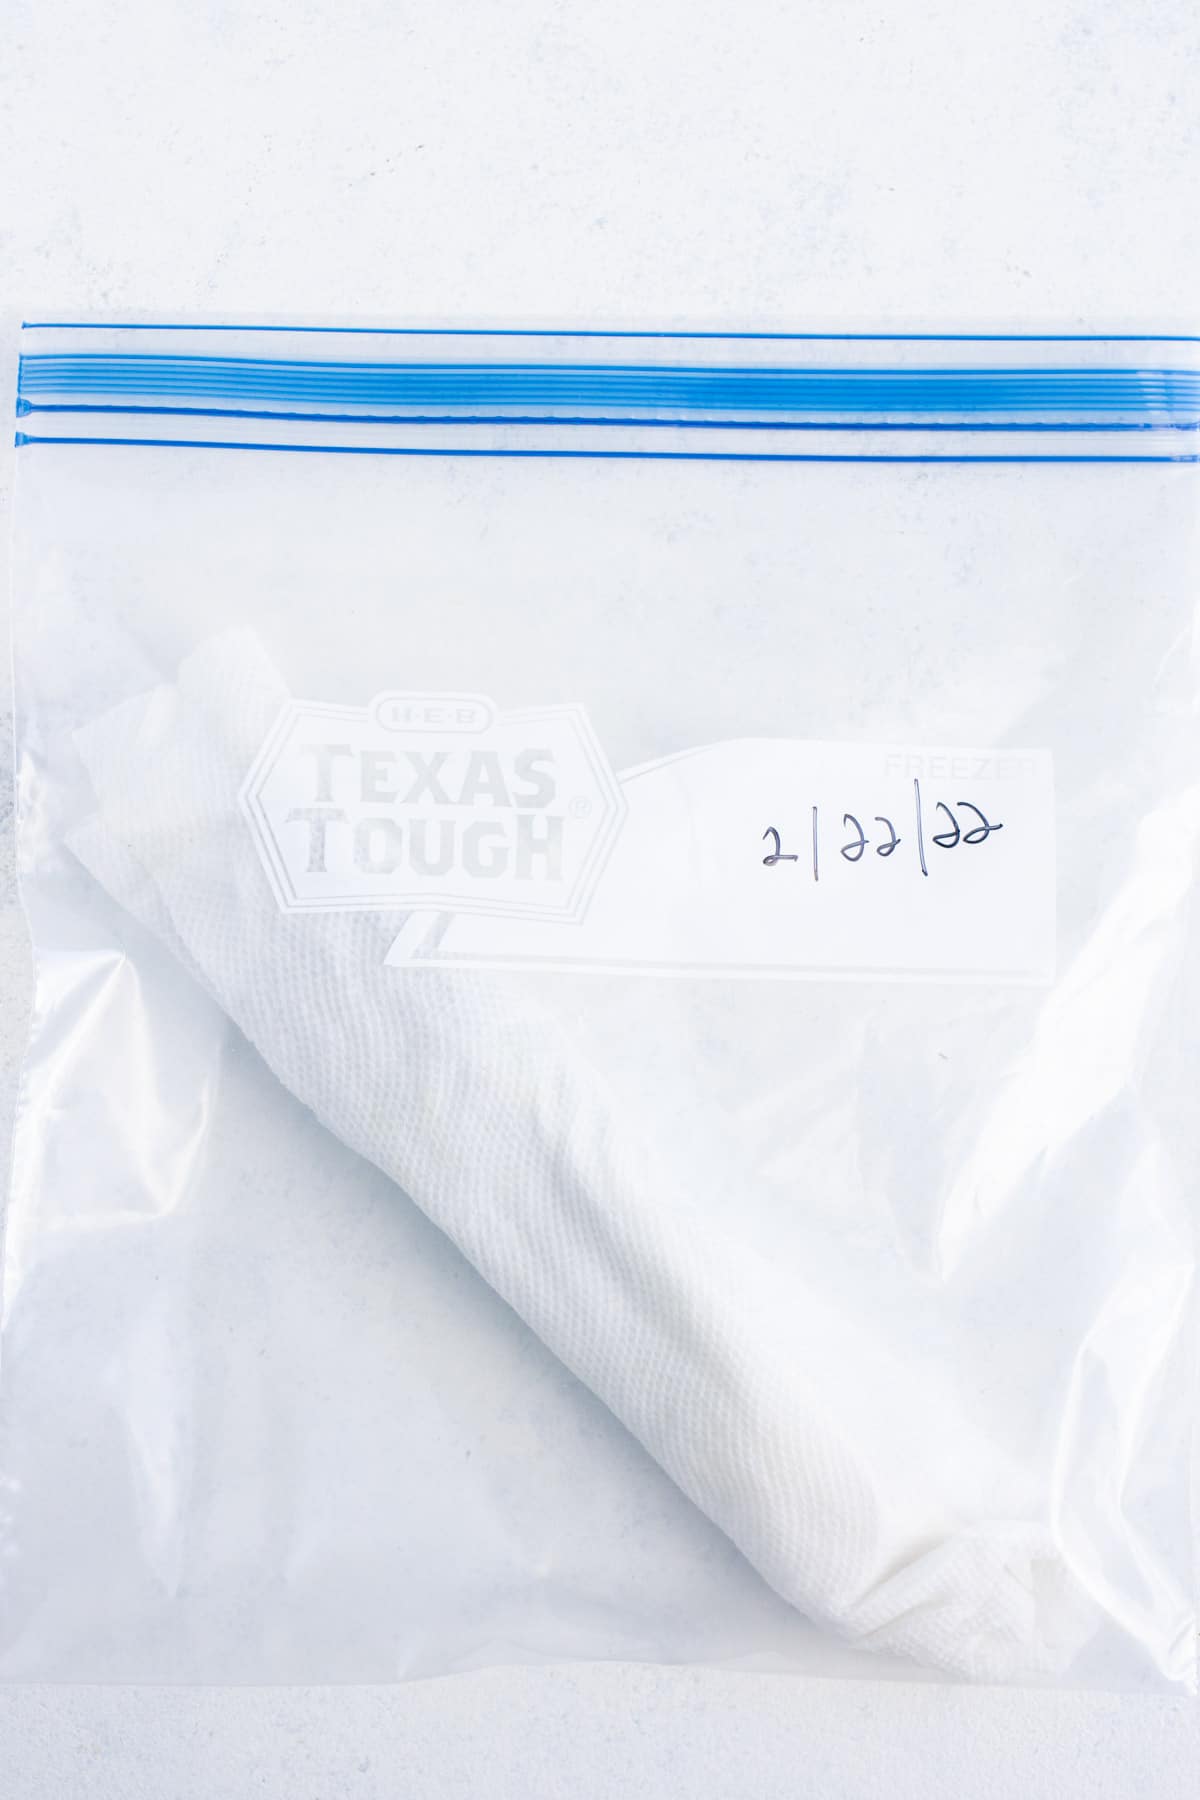 H-E-B Texas Tough Plastic Wrap